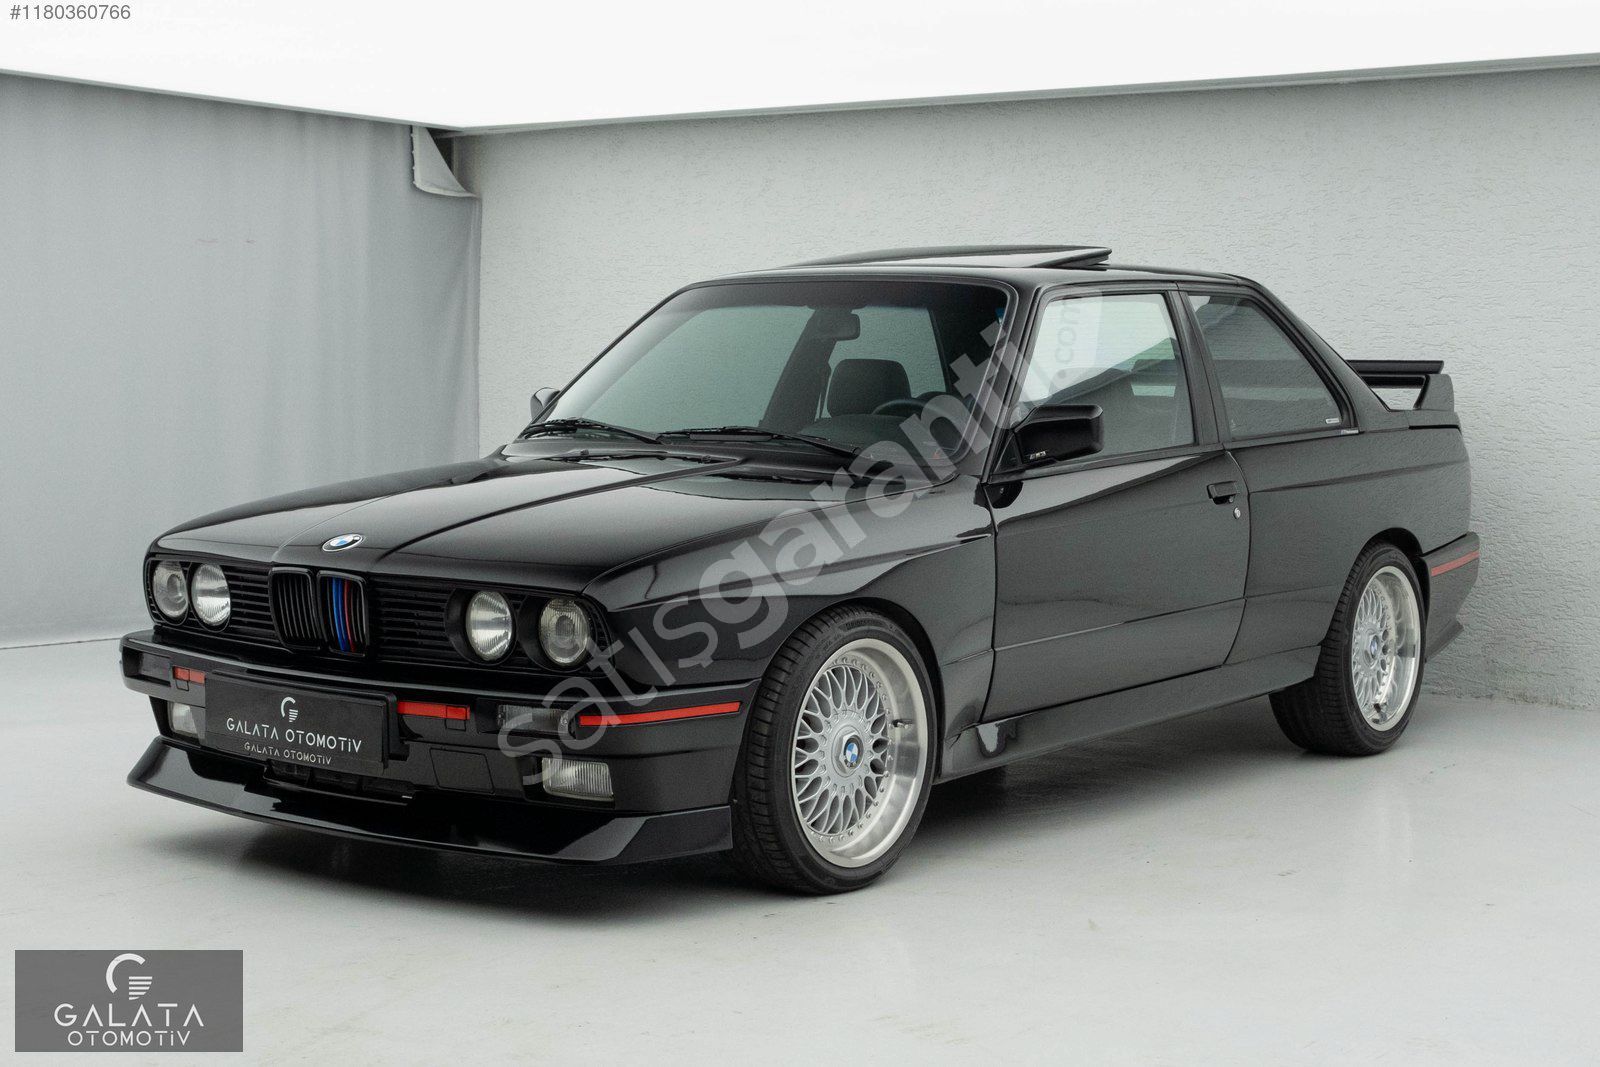 'GALATA' 1984 BMW E30 M3 COUPE